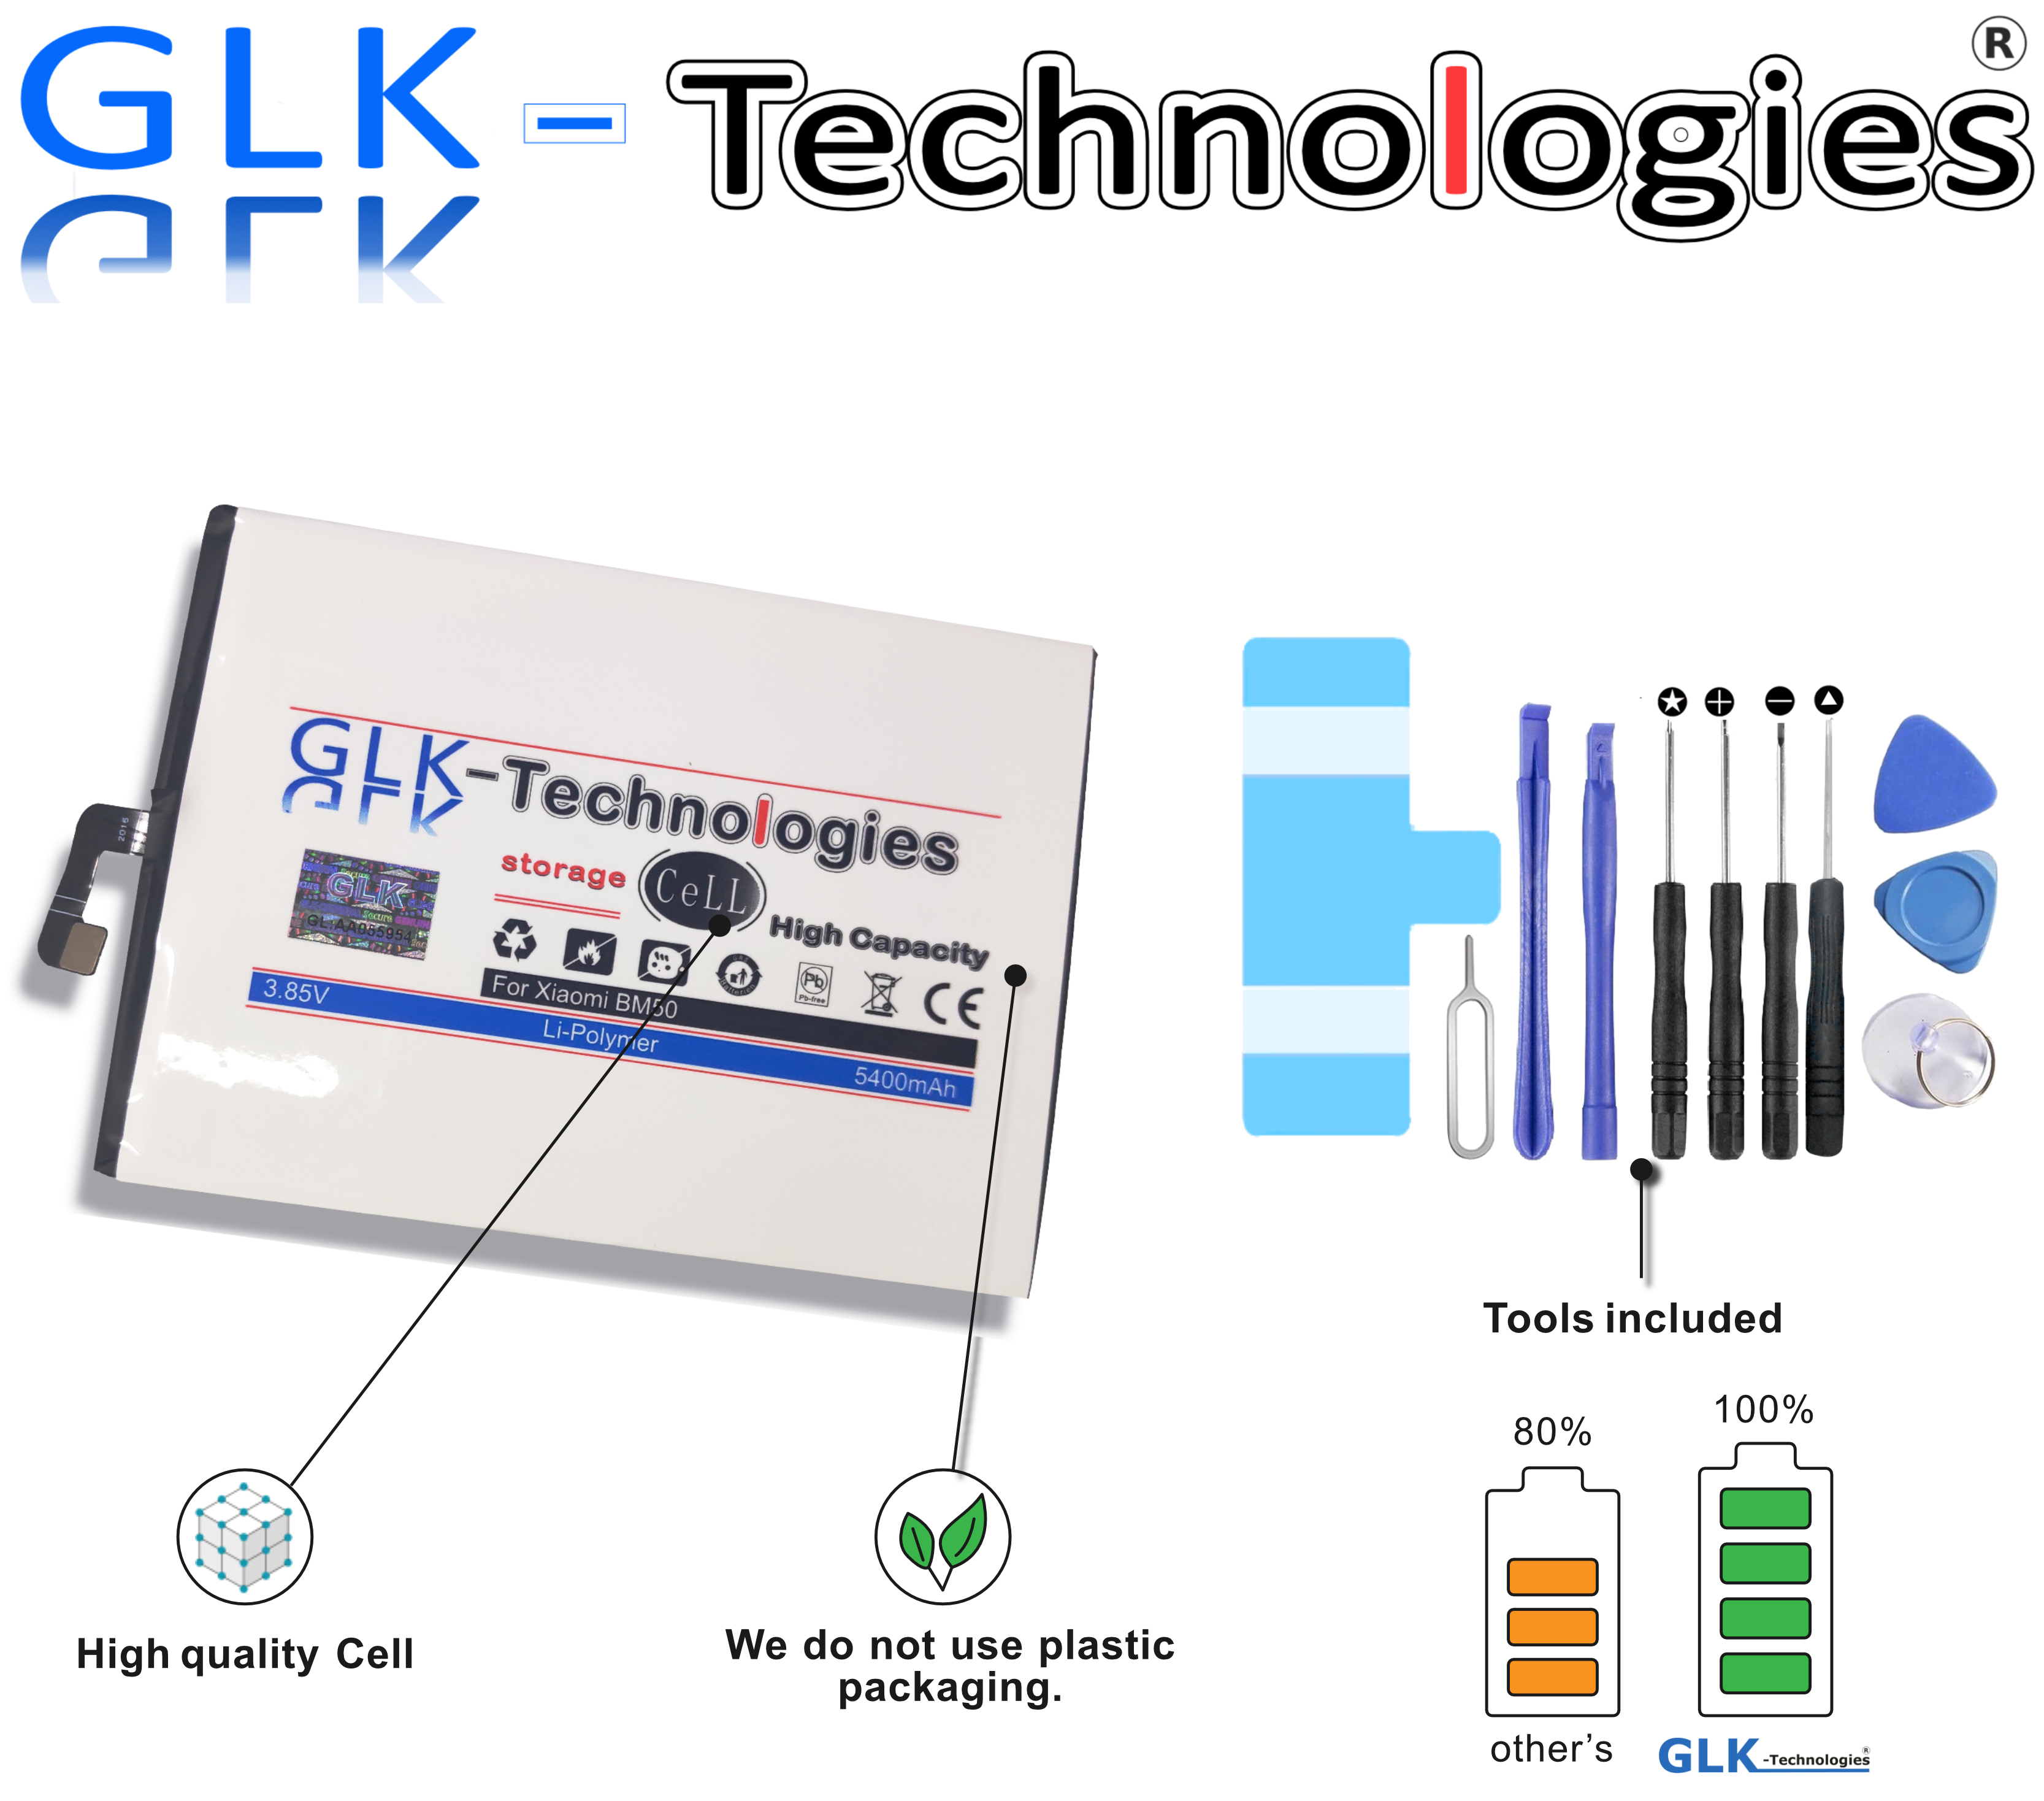 GLK-TECHNOLOGIES High Power 5400 mAh Mi Xiaomi BM50 Batterie // Max Werkzeugset inkl Li-Ion 2 Ersatz Akku für Akku Smartphone